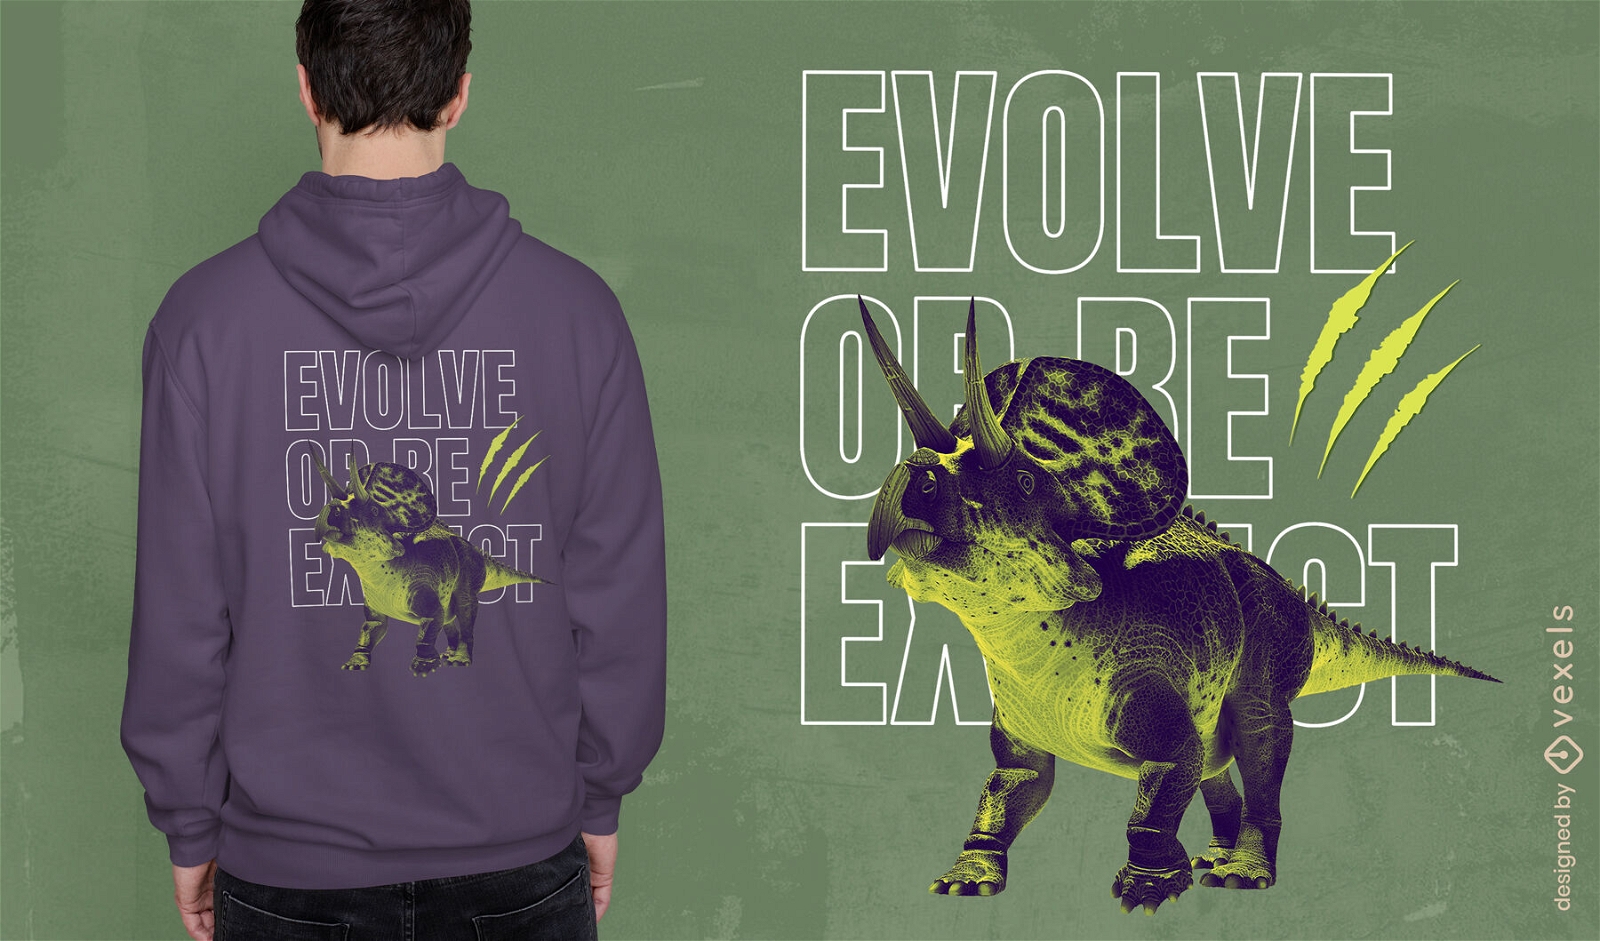 Dise?o de camiseta de dinosaurio evolucionado o extinto.